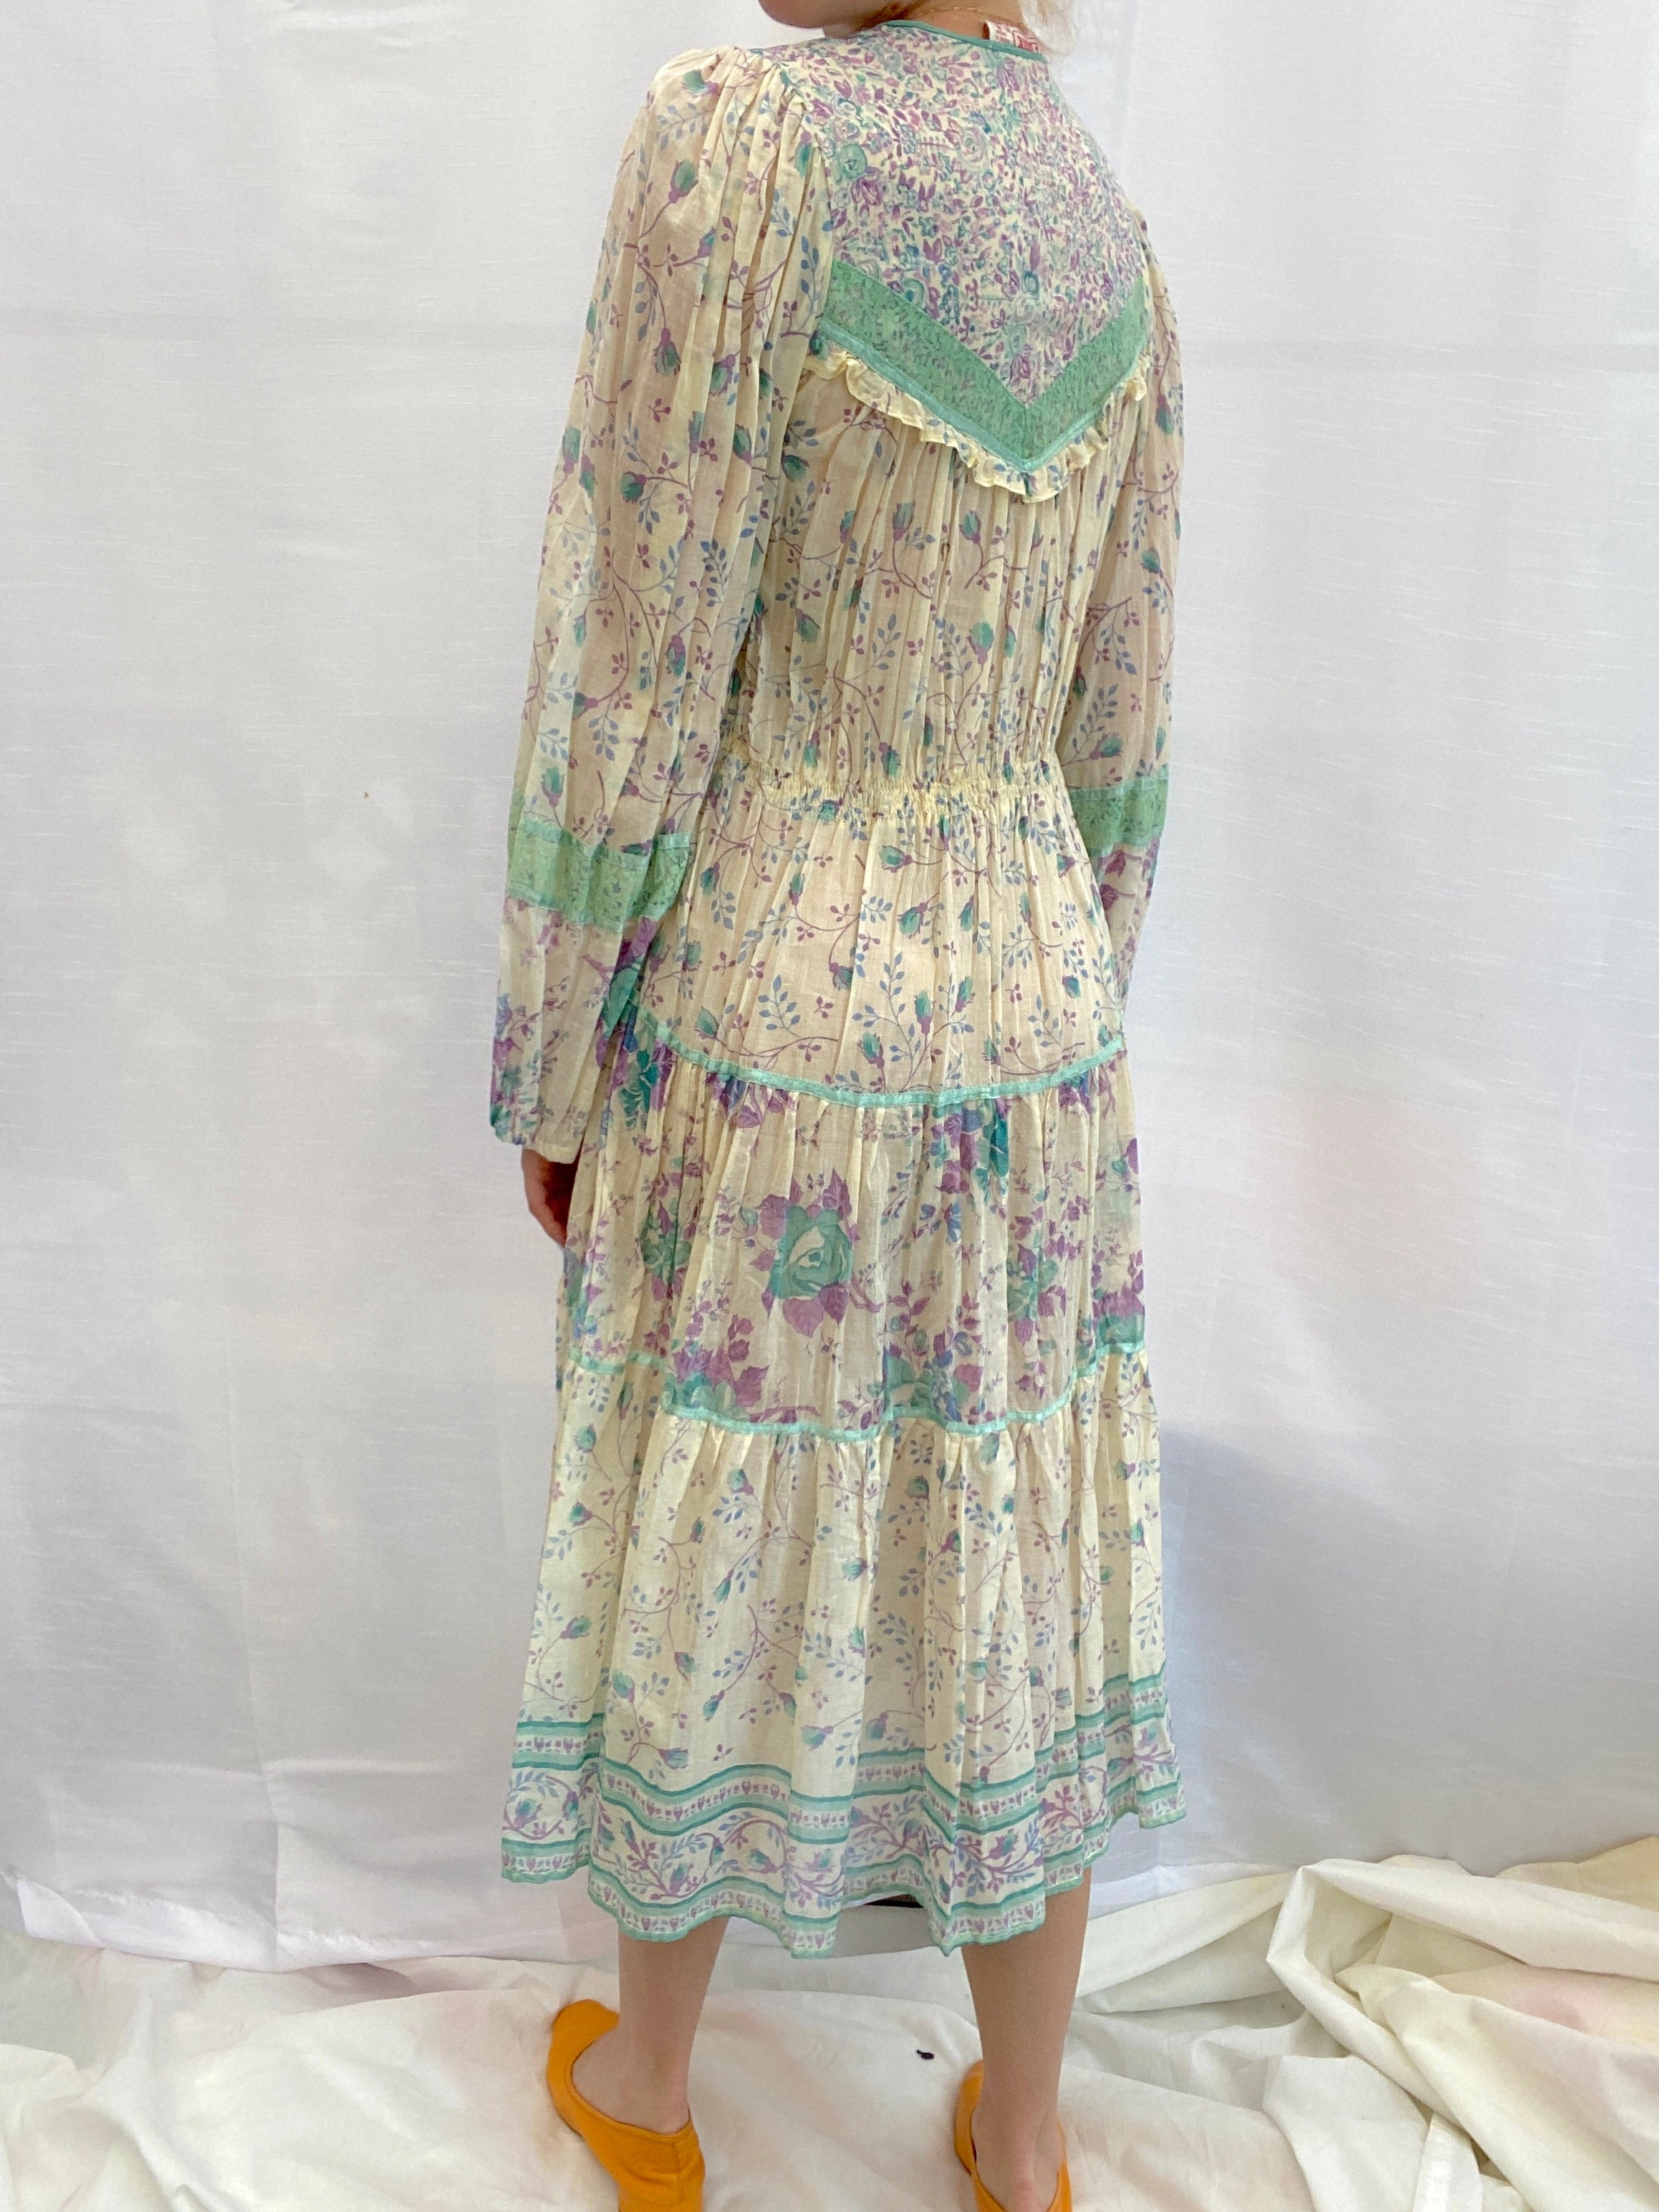 1970's Printed Cotton Dress